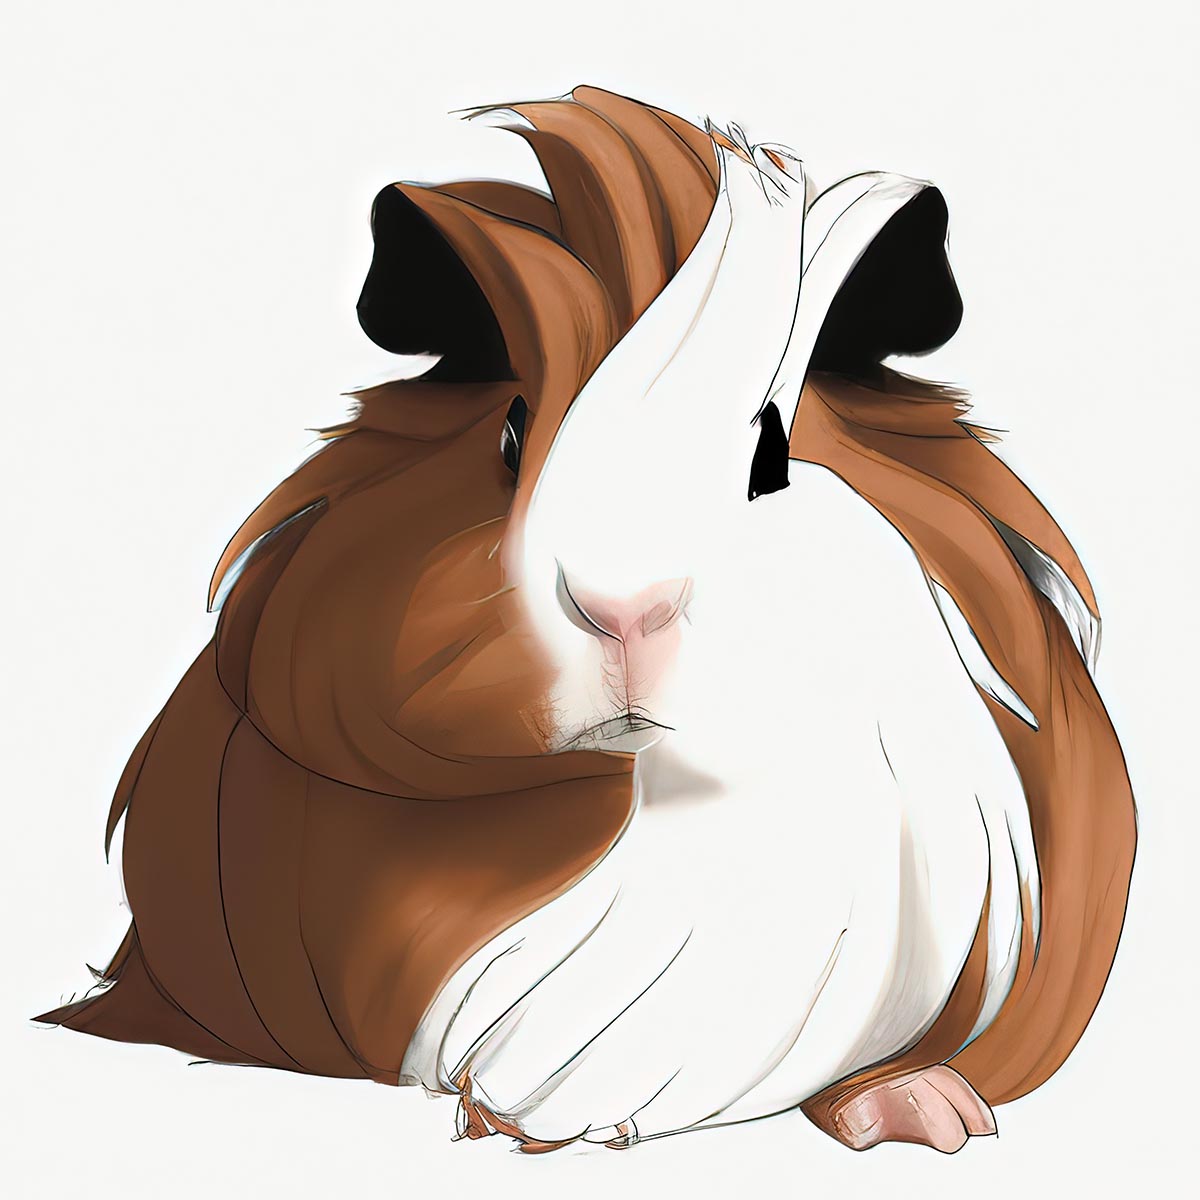 Guinea pig Illustration from CavyArt